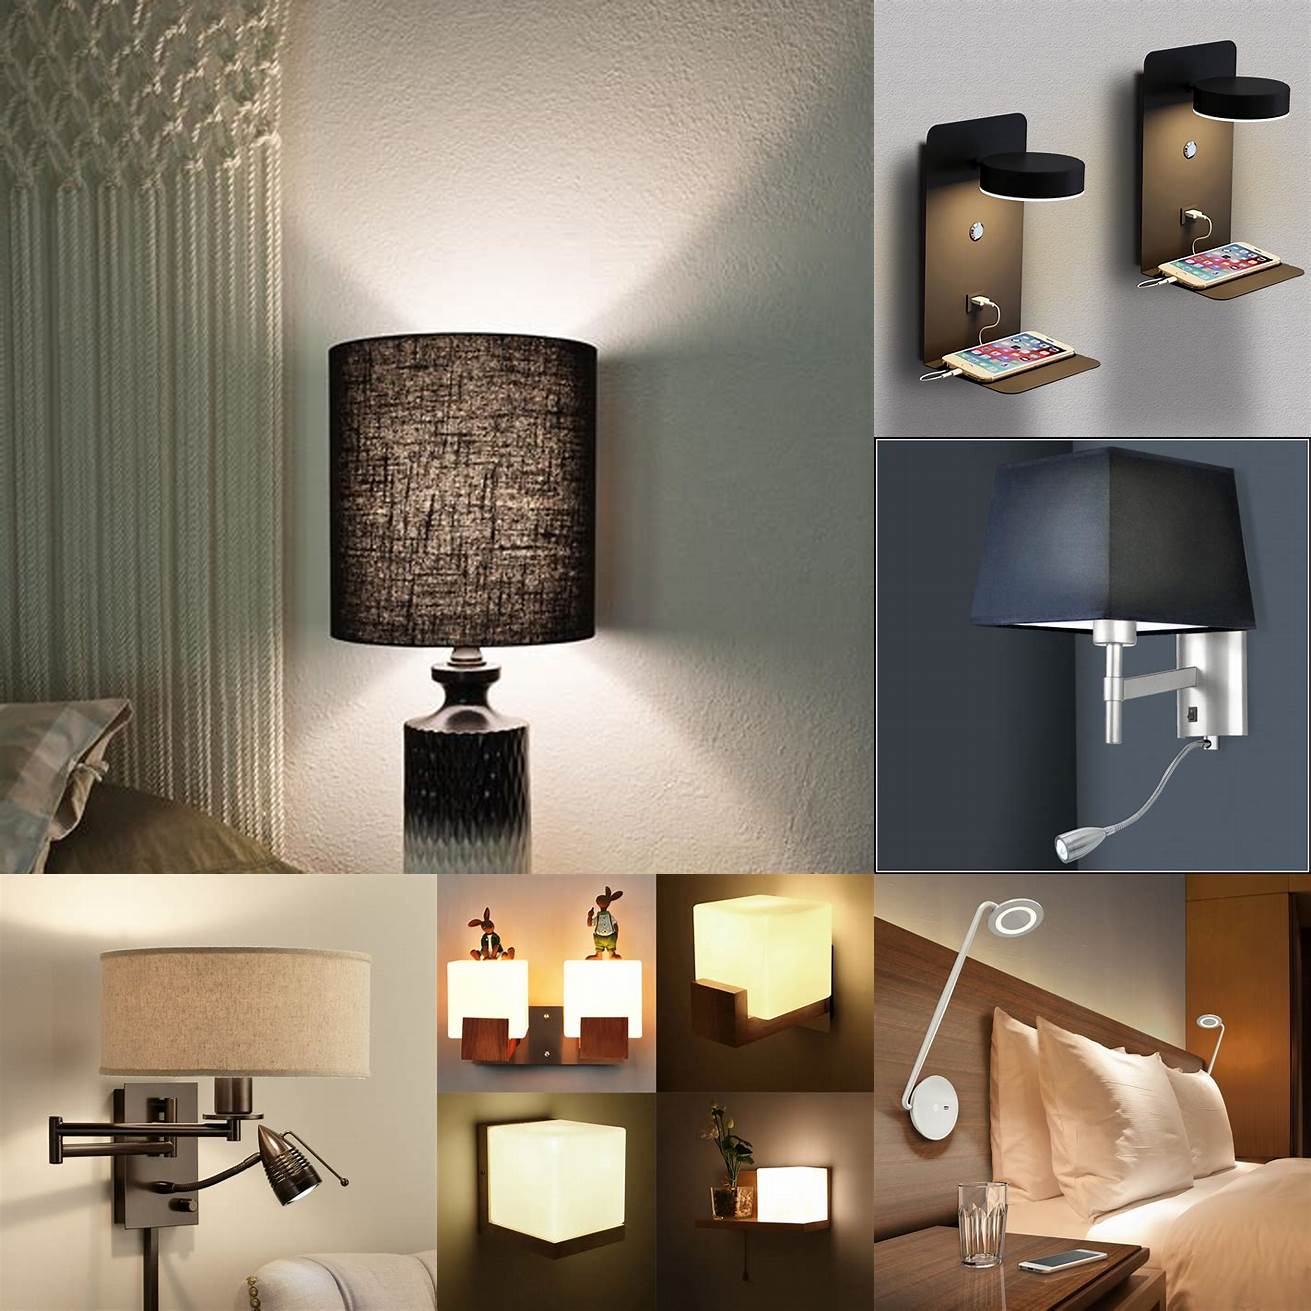 Wall-mounted bedside lamps